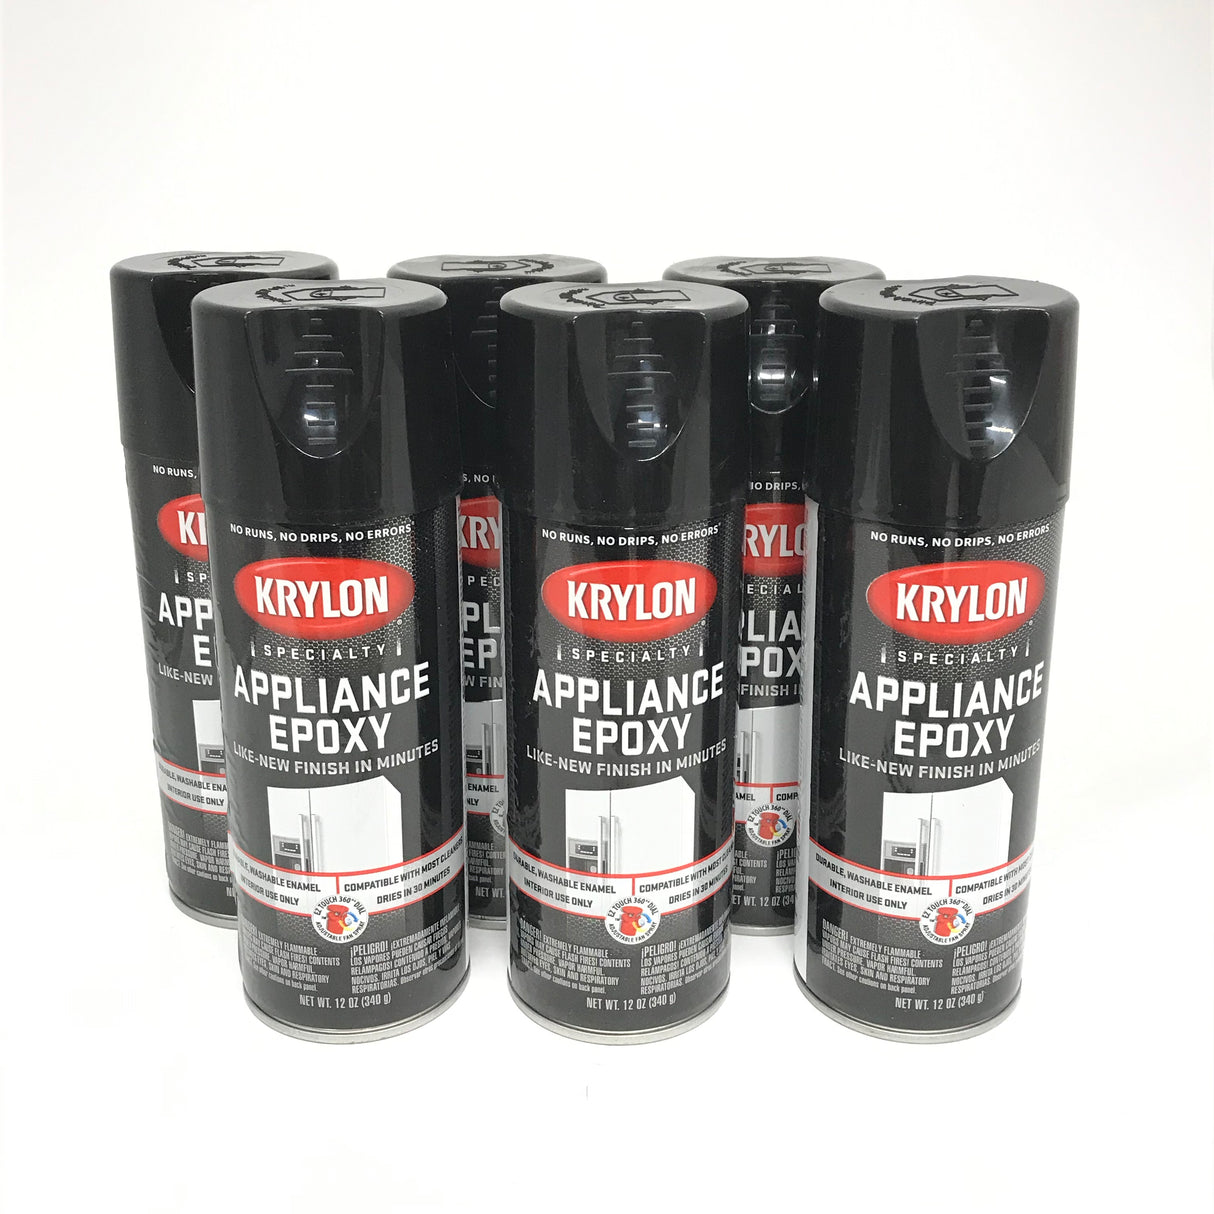 KRYLON 3206-6 PACK BLACK Specialty Appliance Epoxy - Durable, Washable Enamel. Fast Drying - 12 oz Aerosol